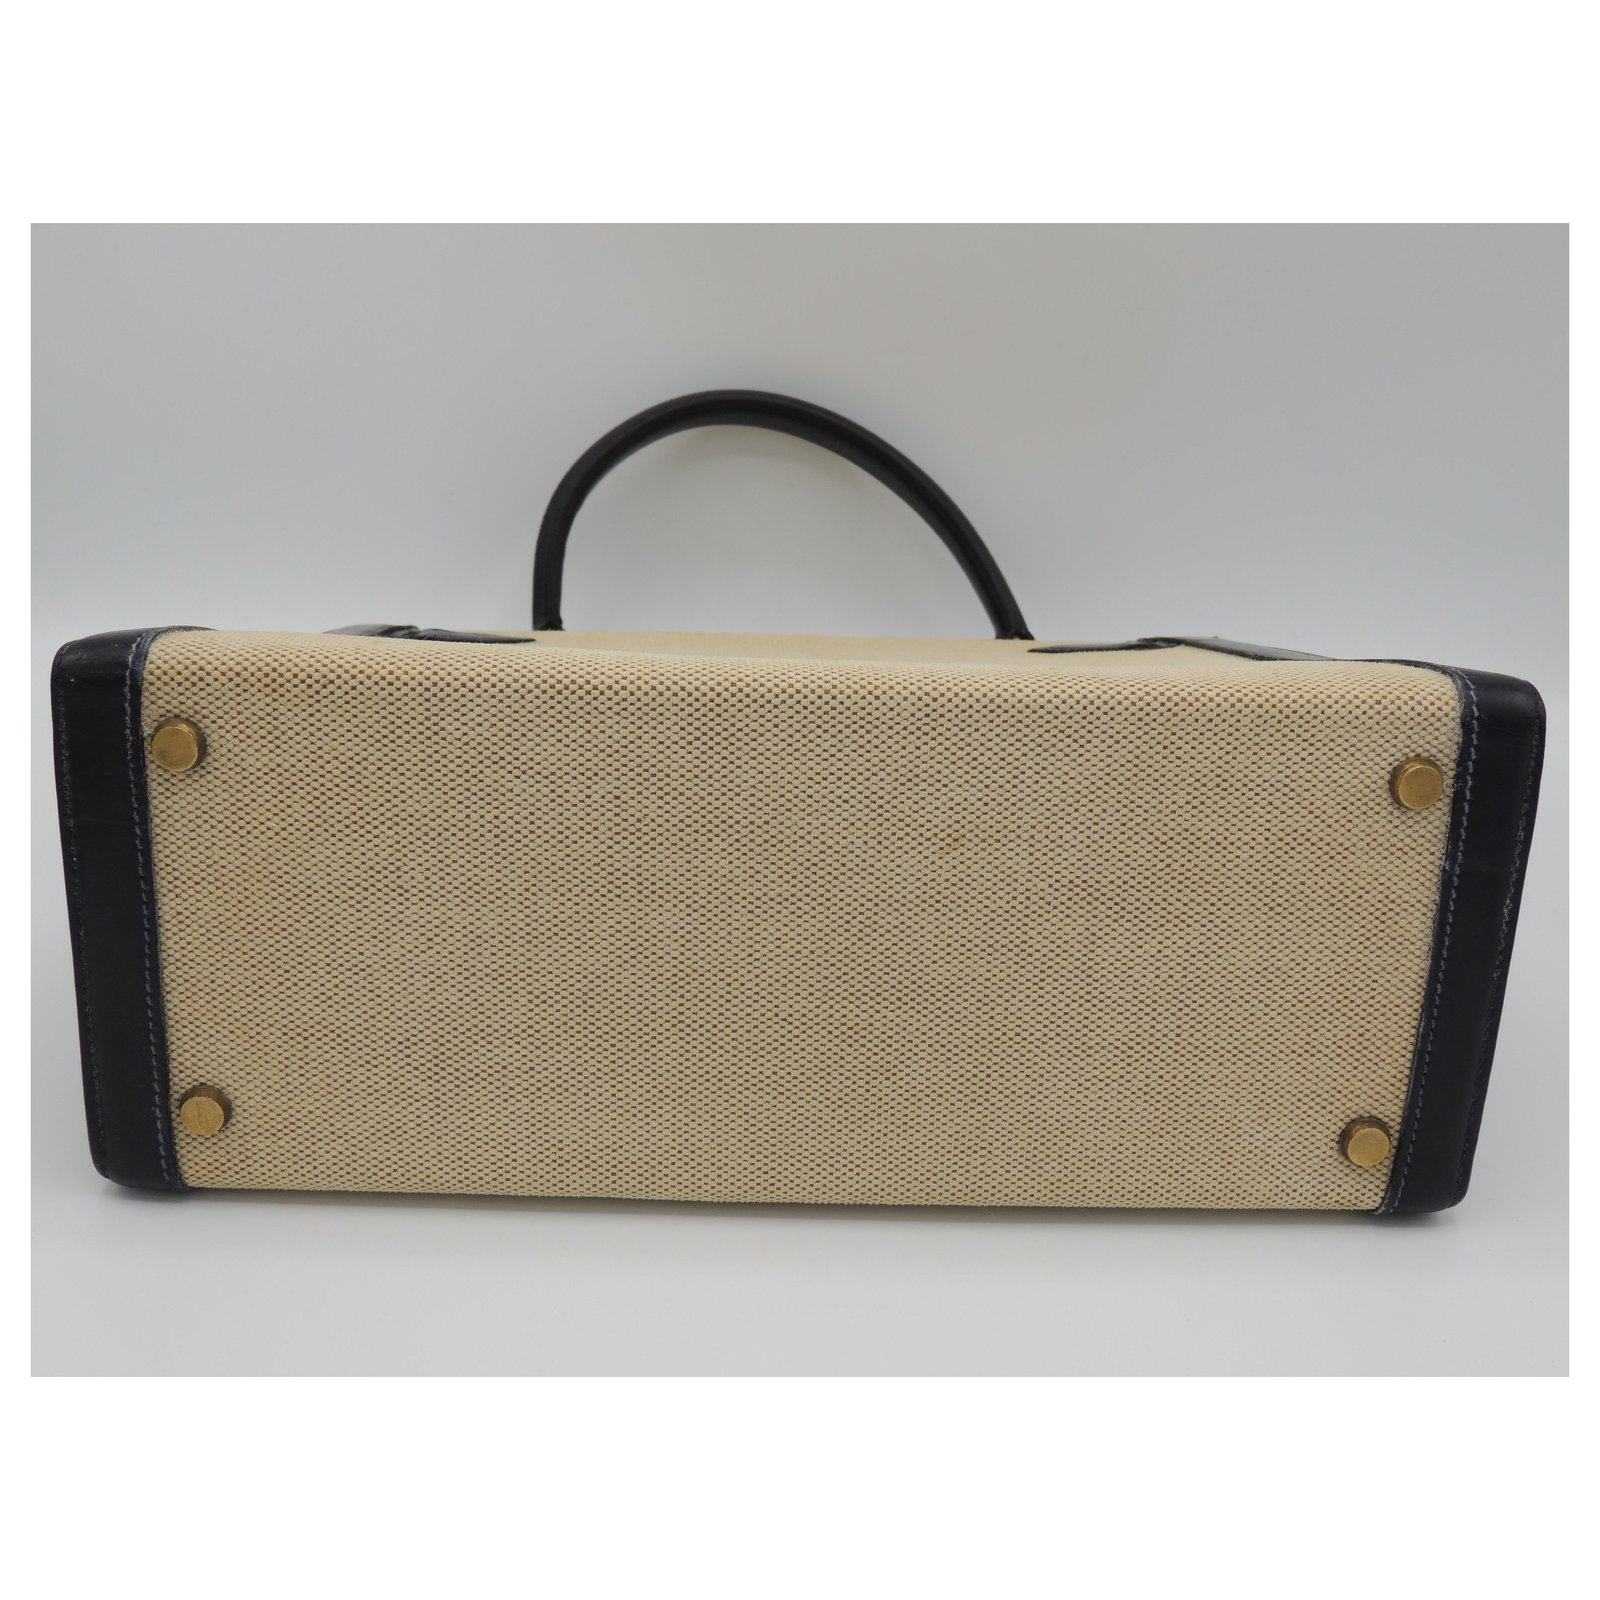 Kelly 28 leather handbag Hermès Navy in Leather - 34558498